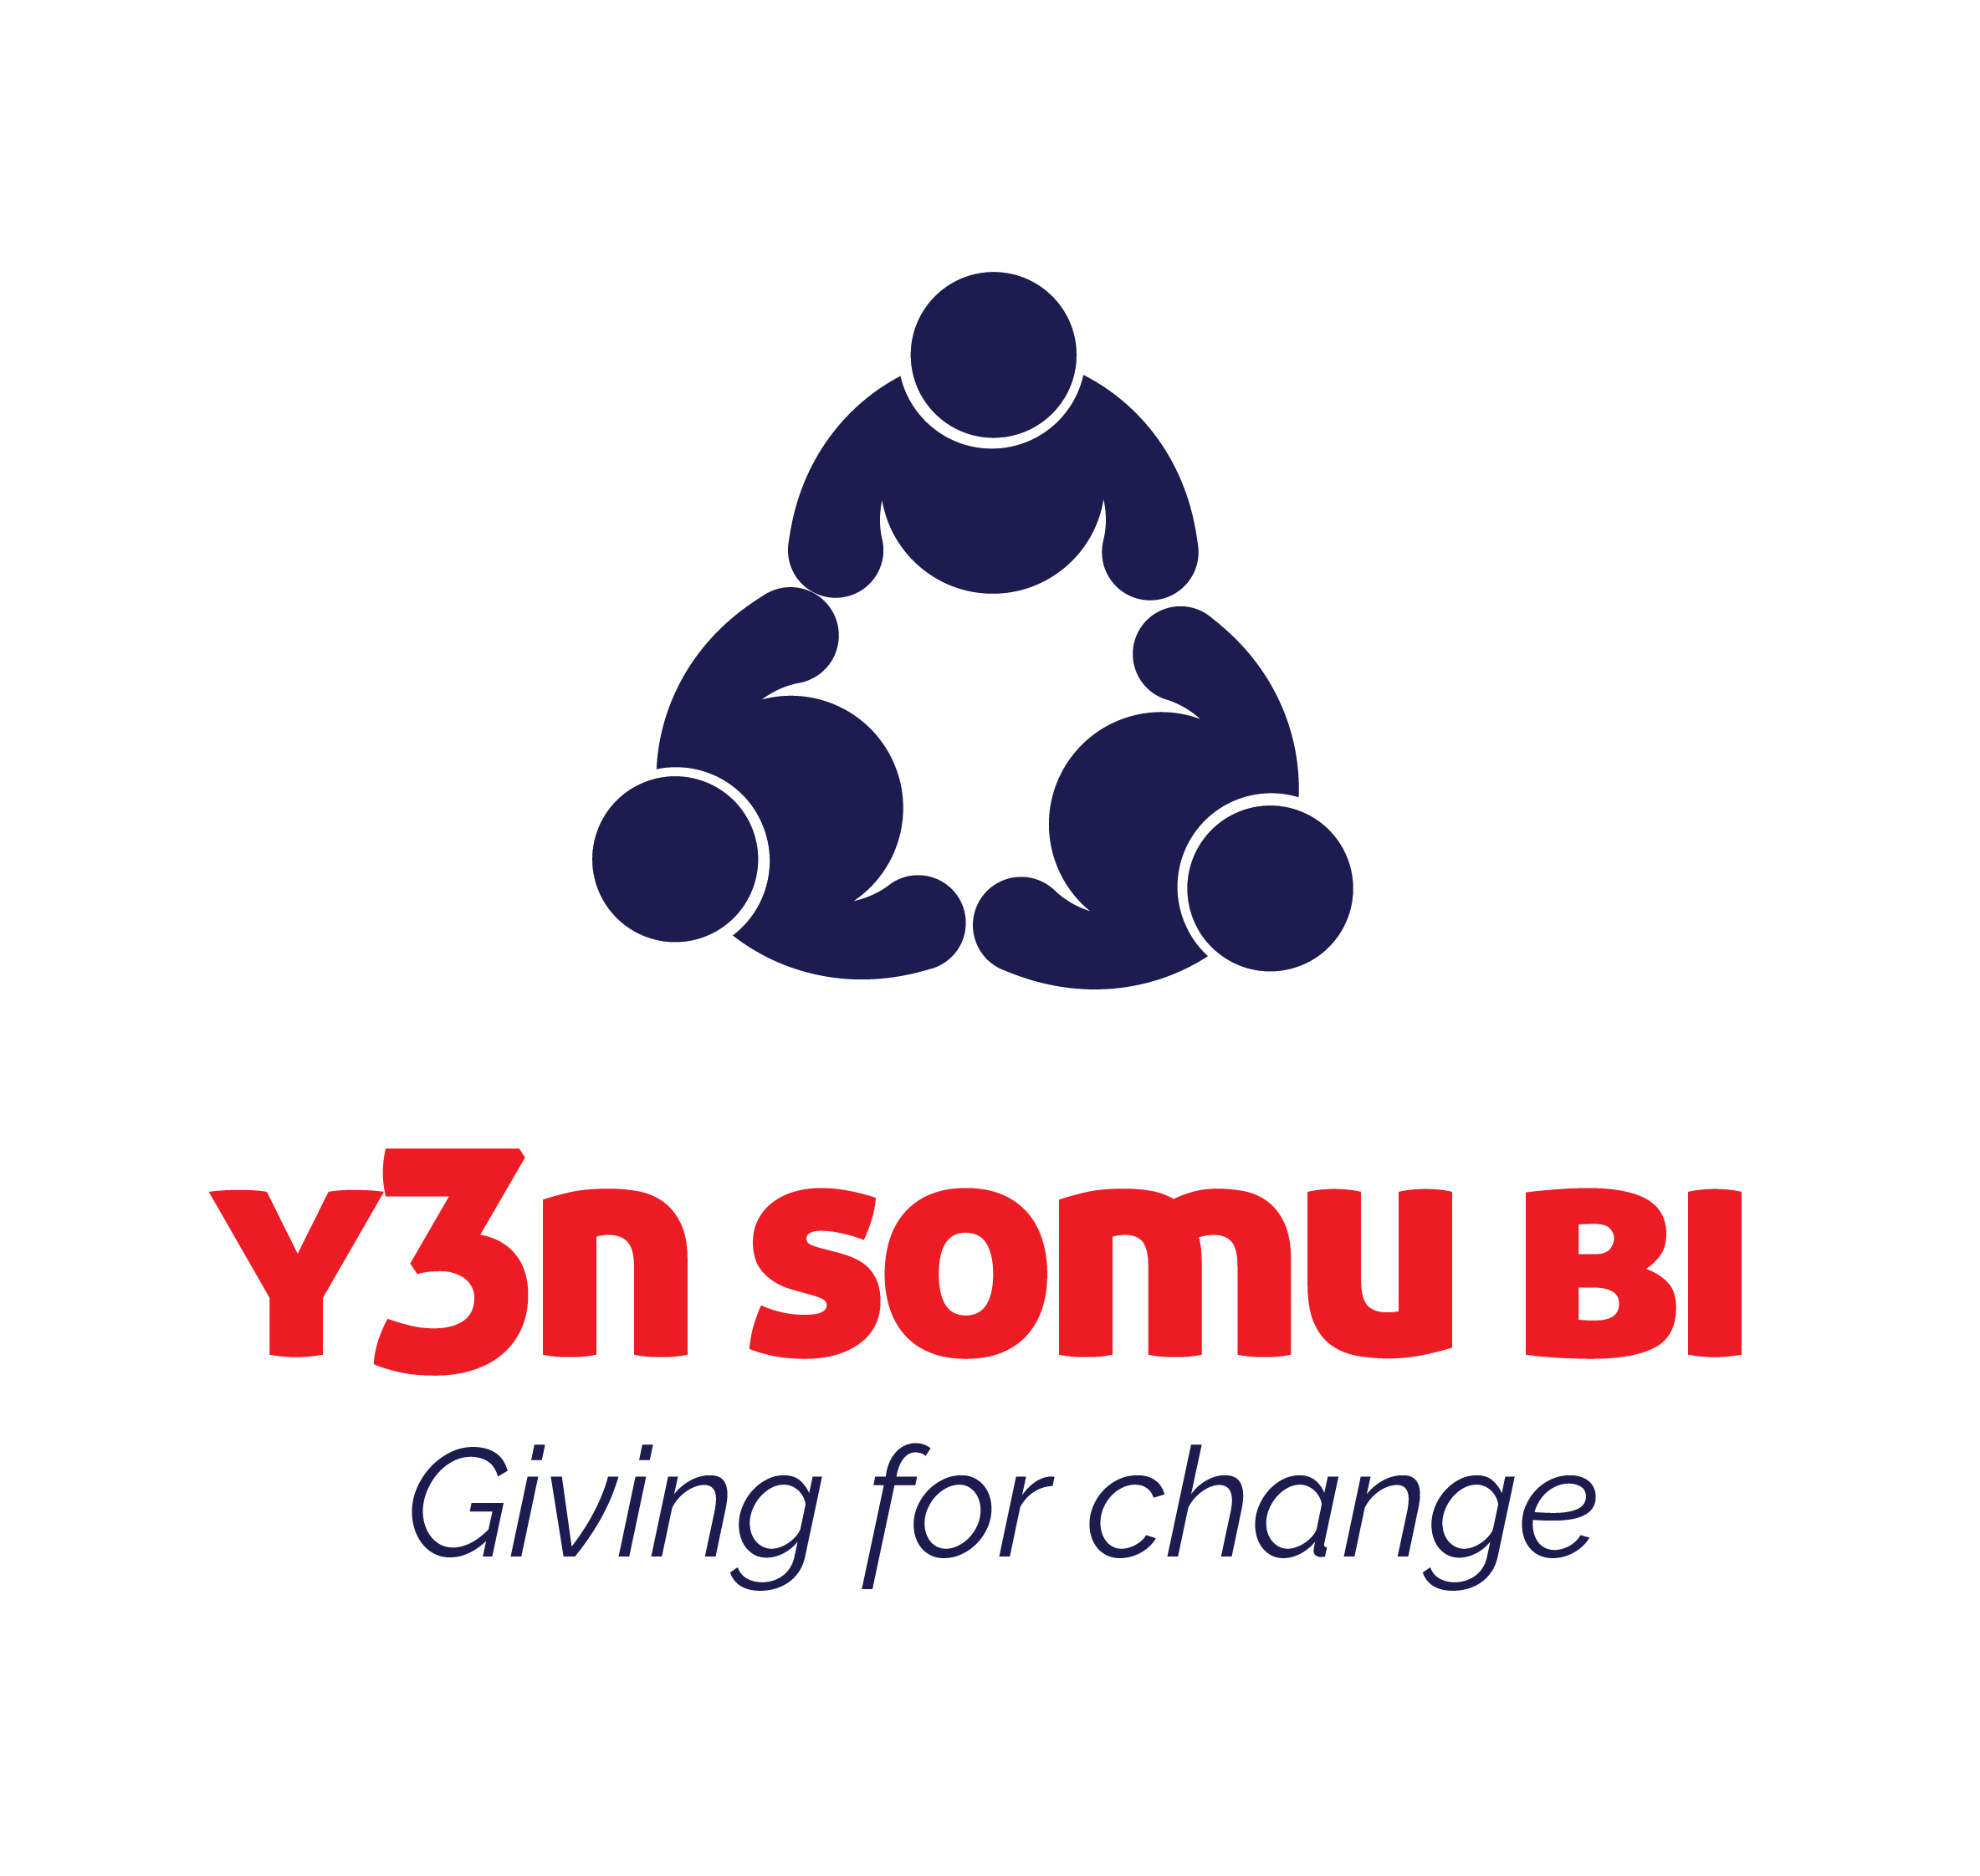 Local Crowdfunding platform www.yensomubi.org launched